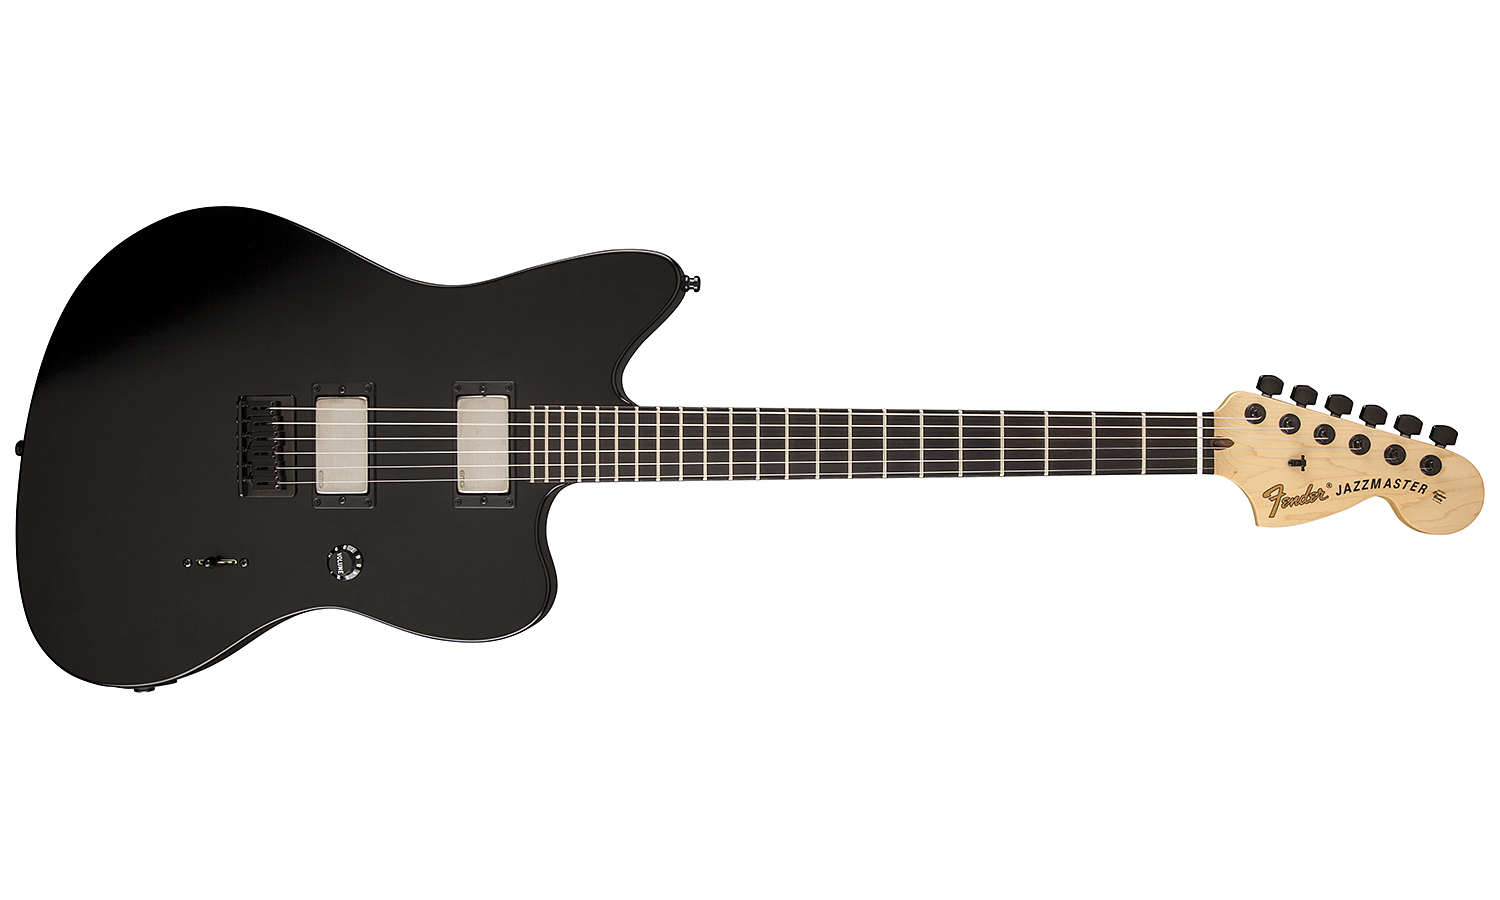 Fender Jim Root Jazzmaster Usa 2h Emg Ht Eb - Flat Black - Retro rock electric guitar - Variation 1